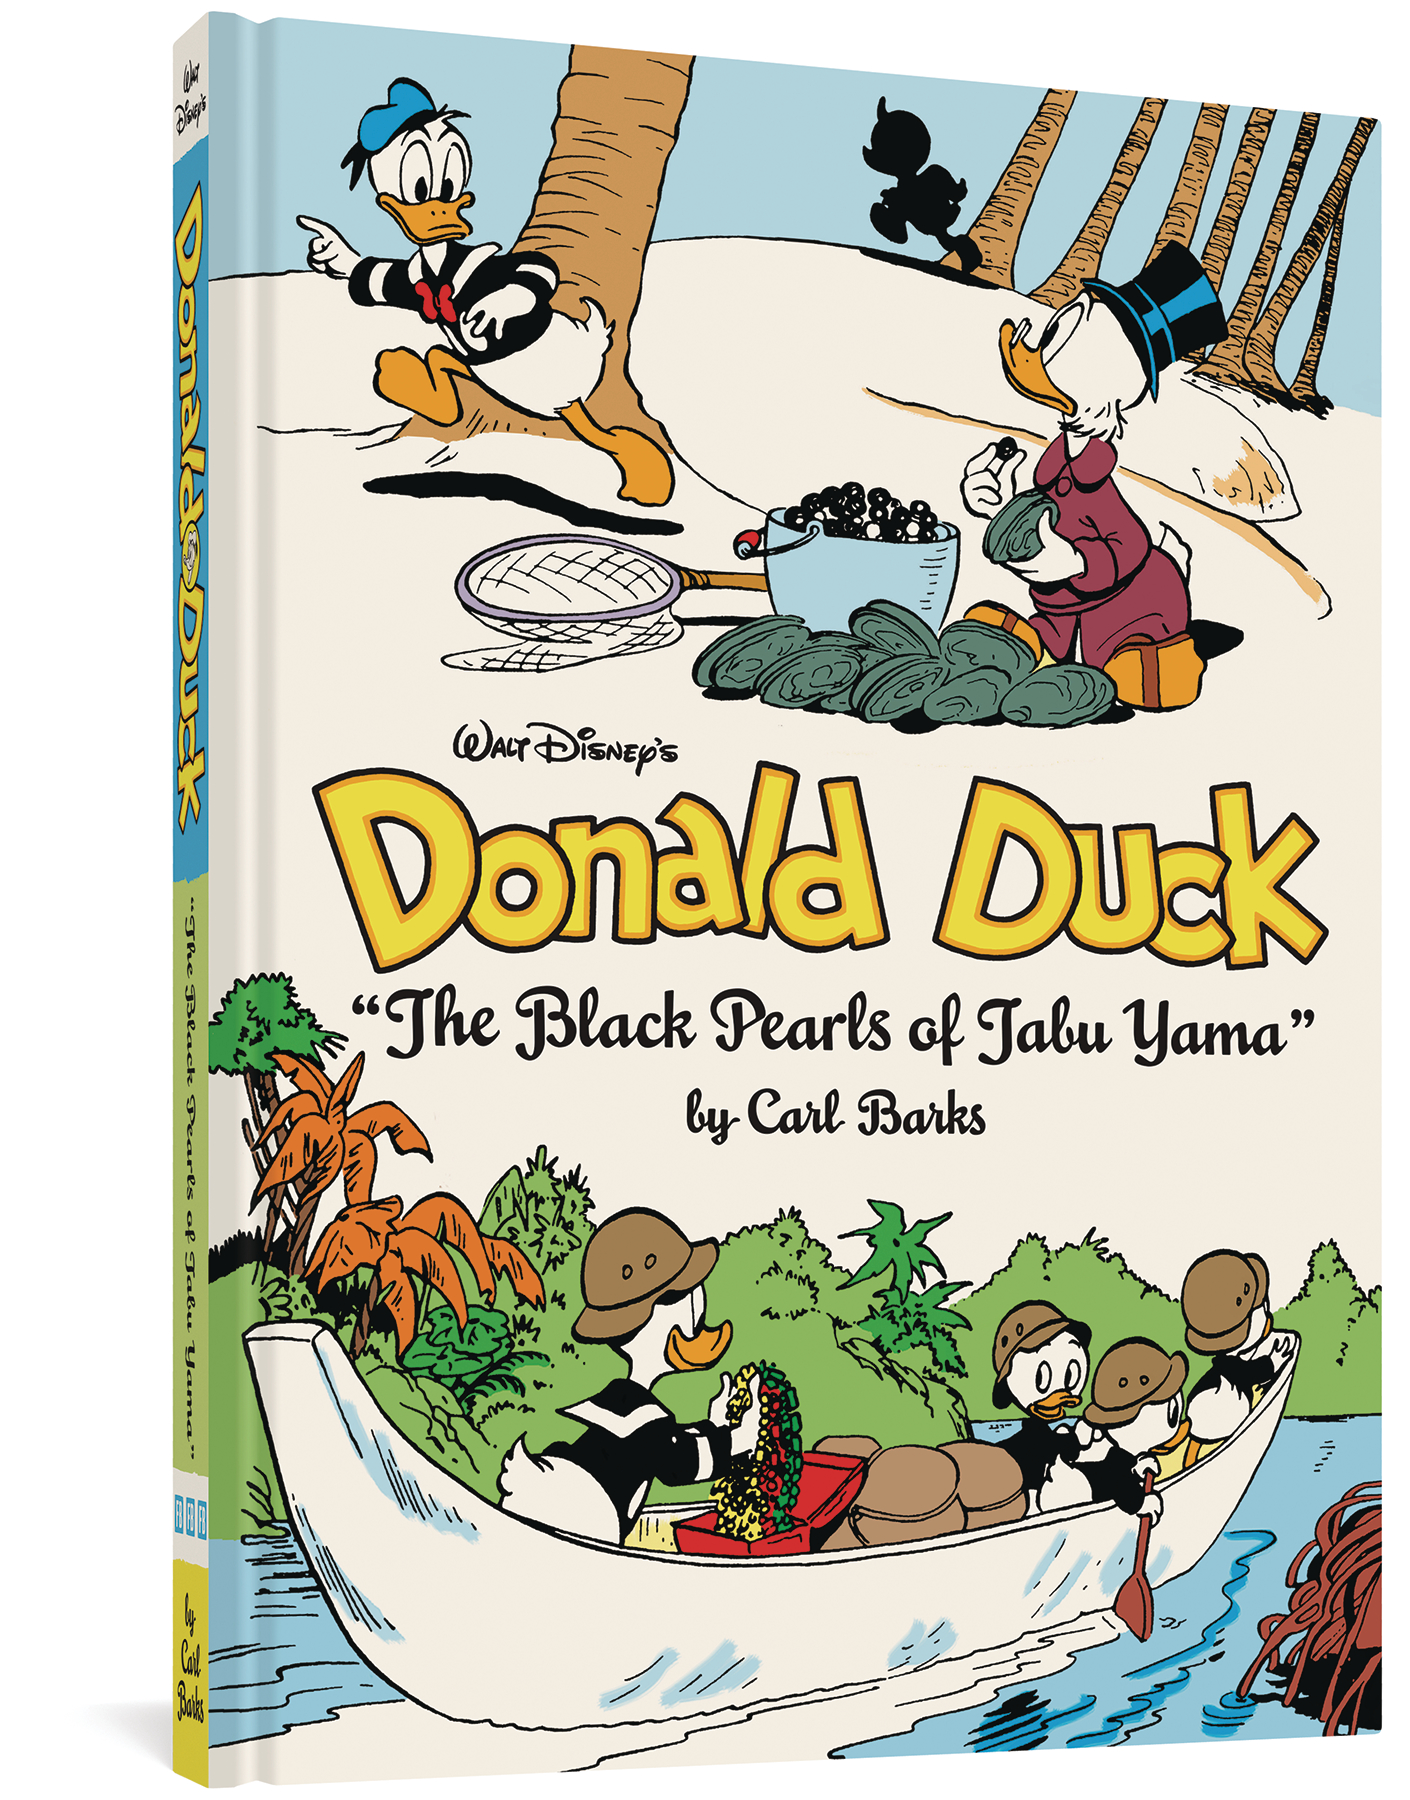 Complete Carl Barks Disney Library Hardcover Volume 19 Walt Disney's Donald Duck The Black Pearls of Tabu Yama